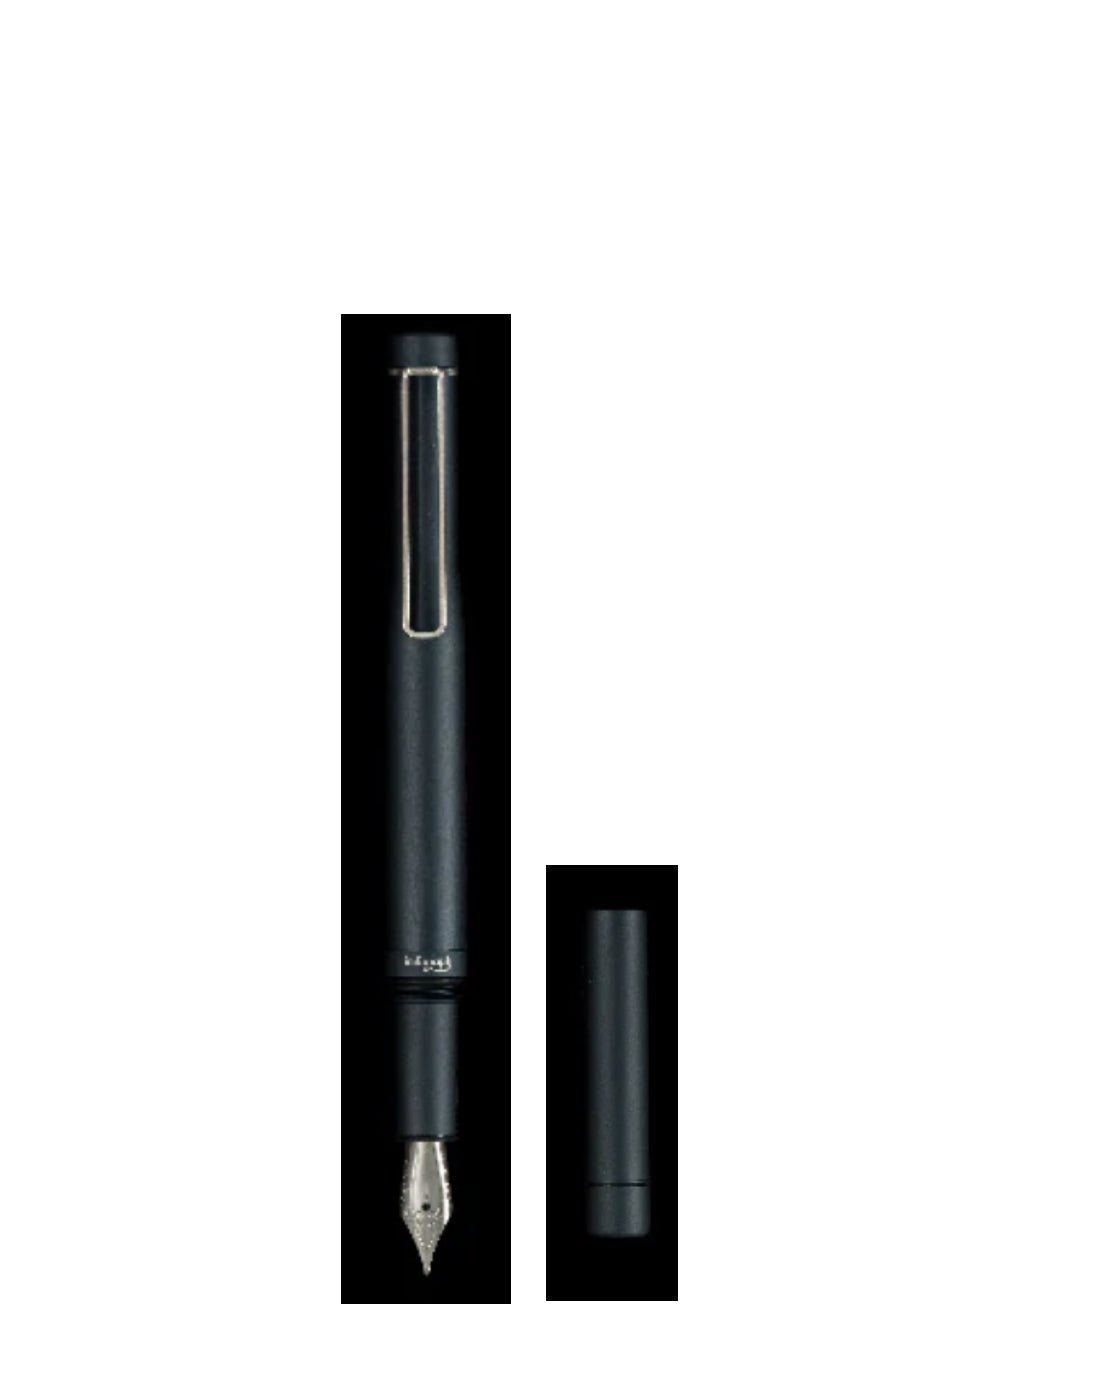 Pen & Ink No-Shellac India Black Ink